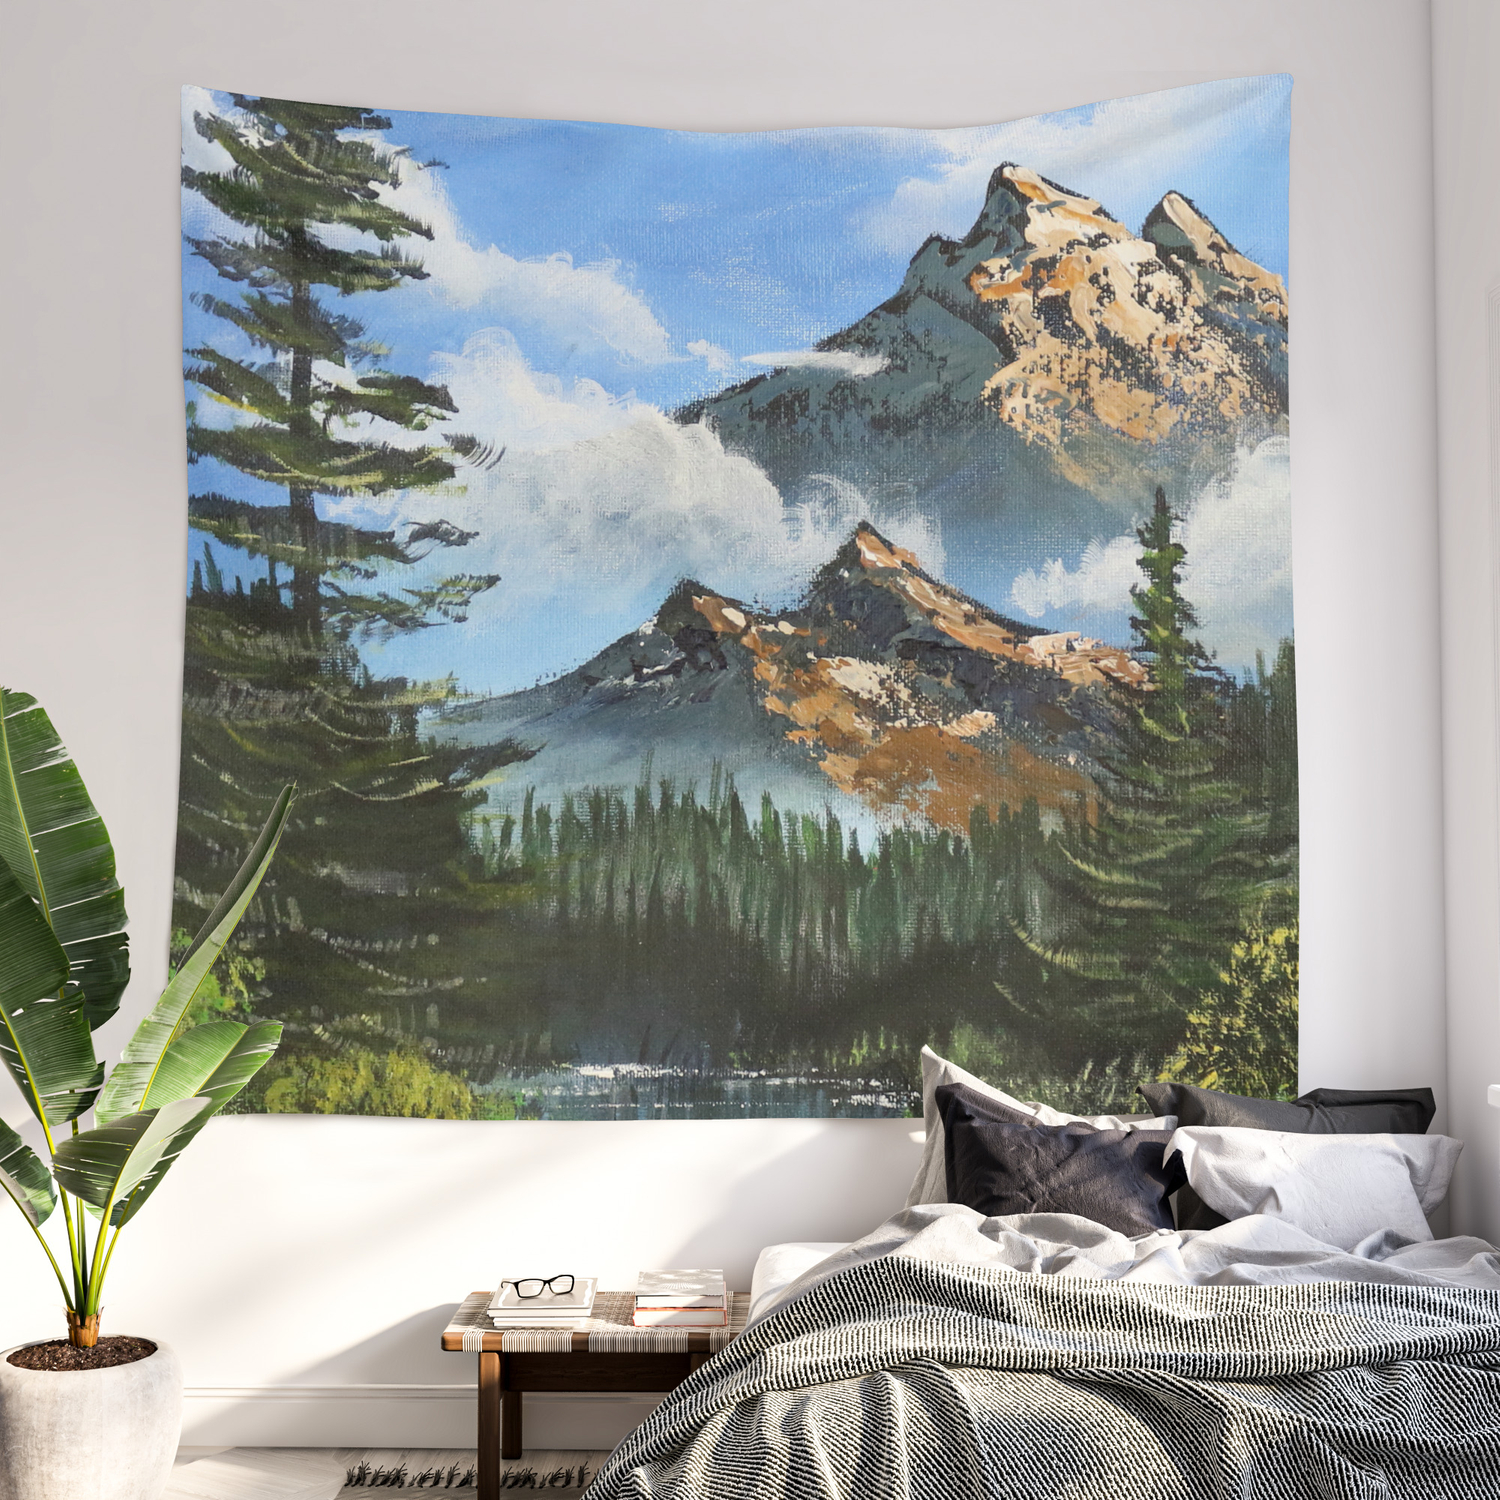 Epic Mountain Landscape Wallpapers